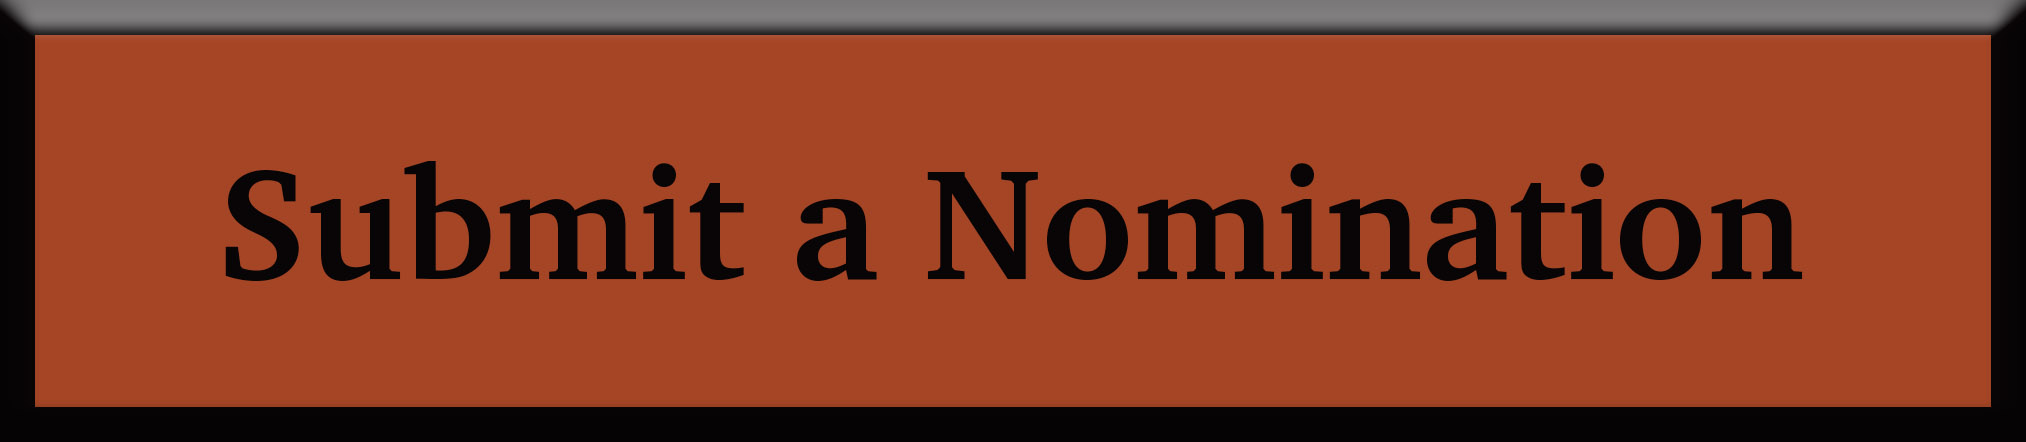 Nomination Button